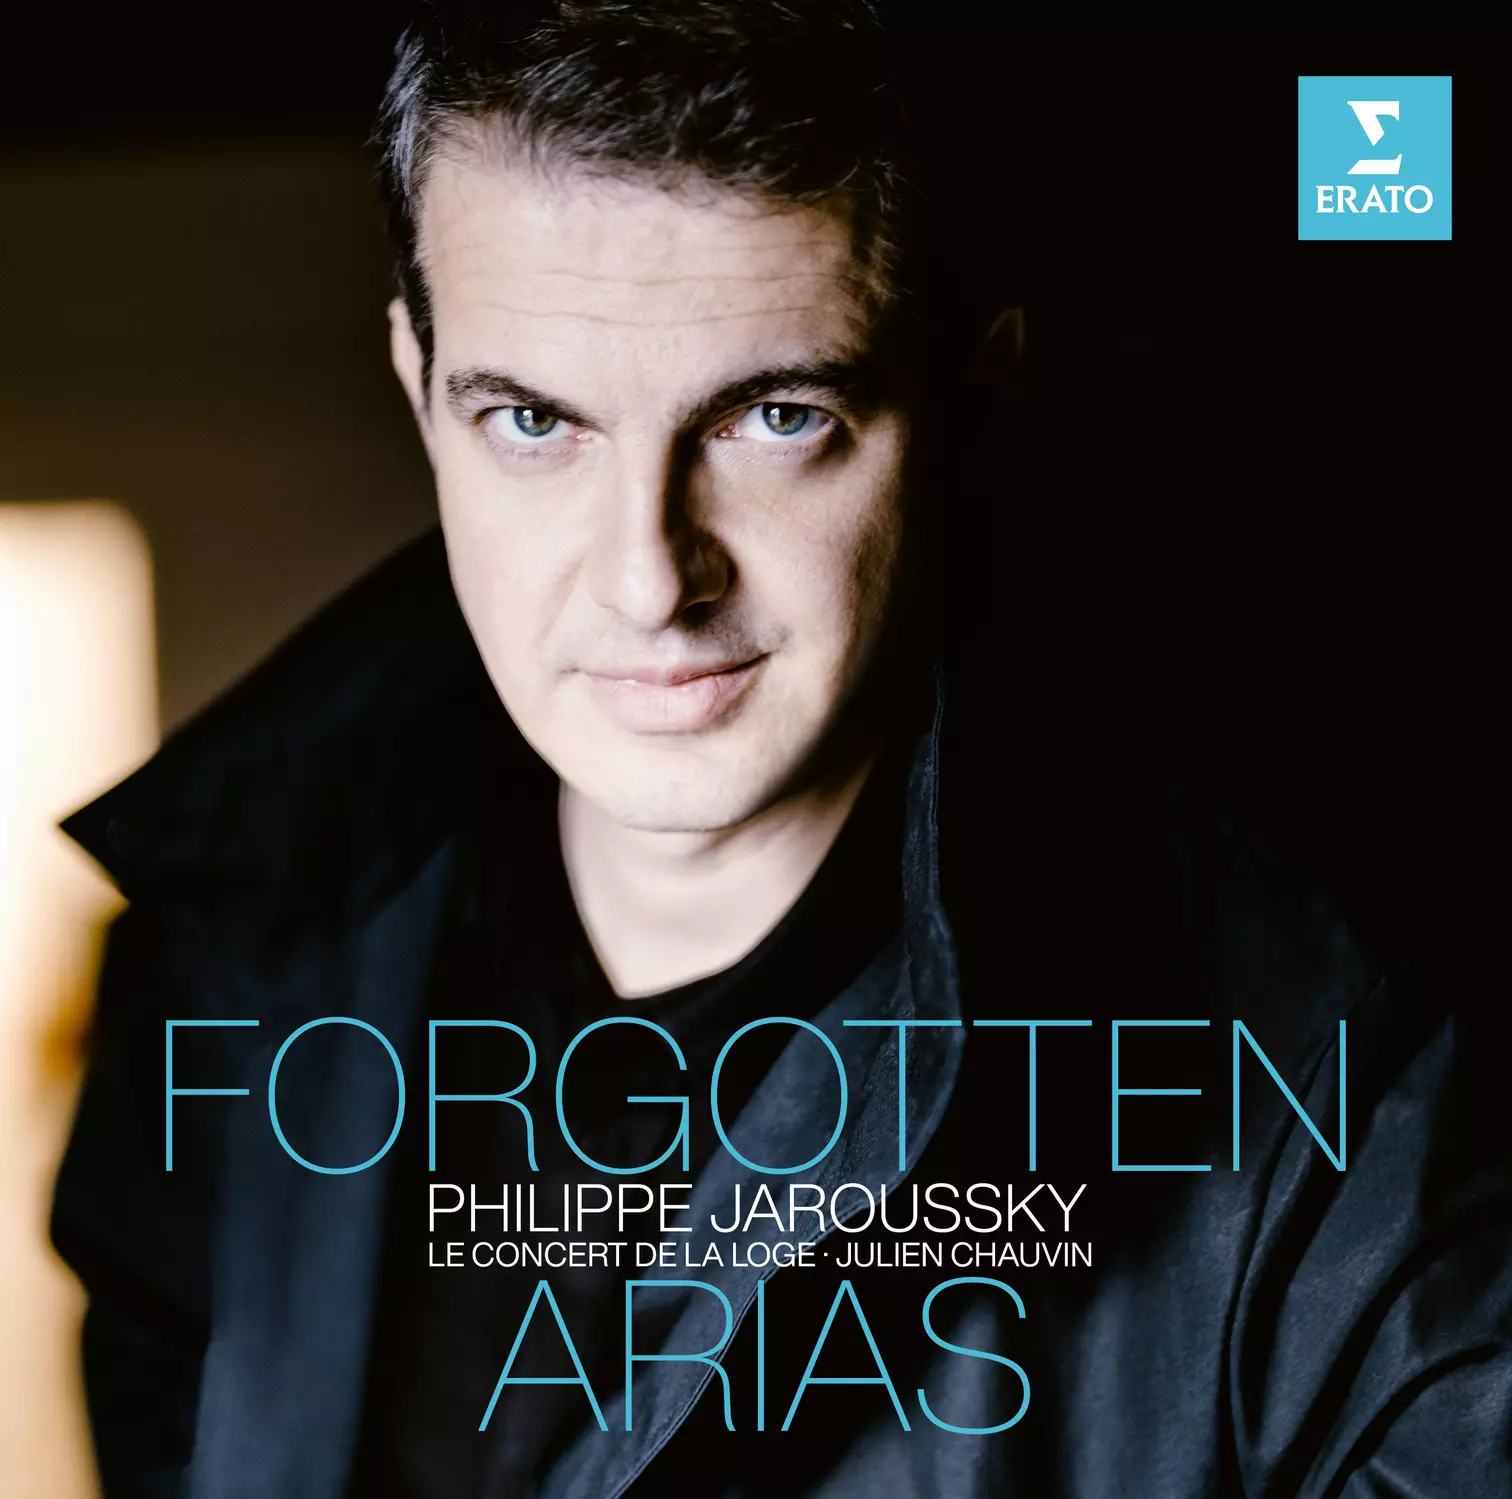 Philippe Jaroussky – Forgotten Arias